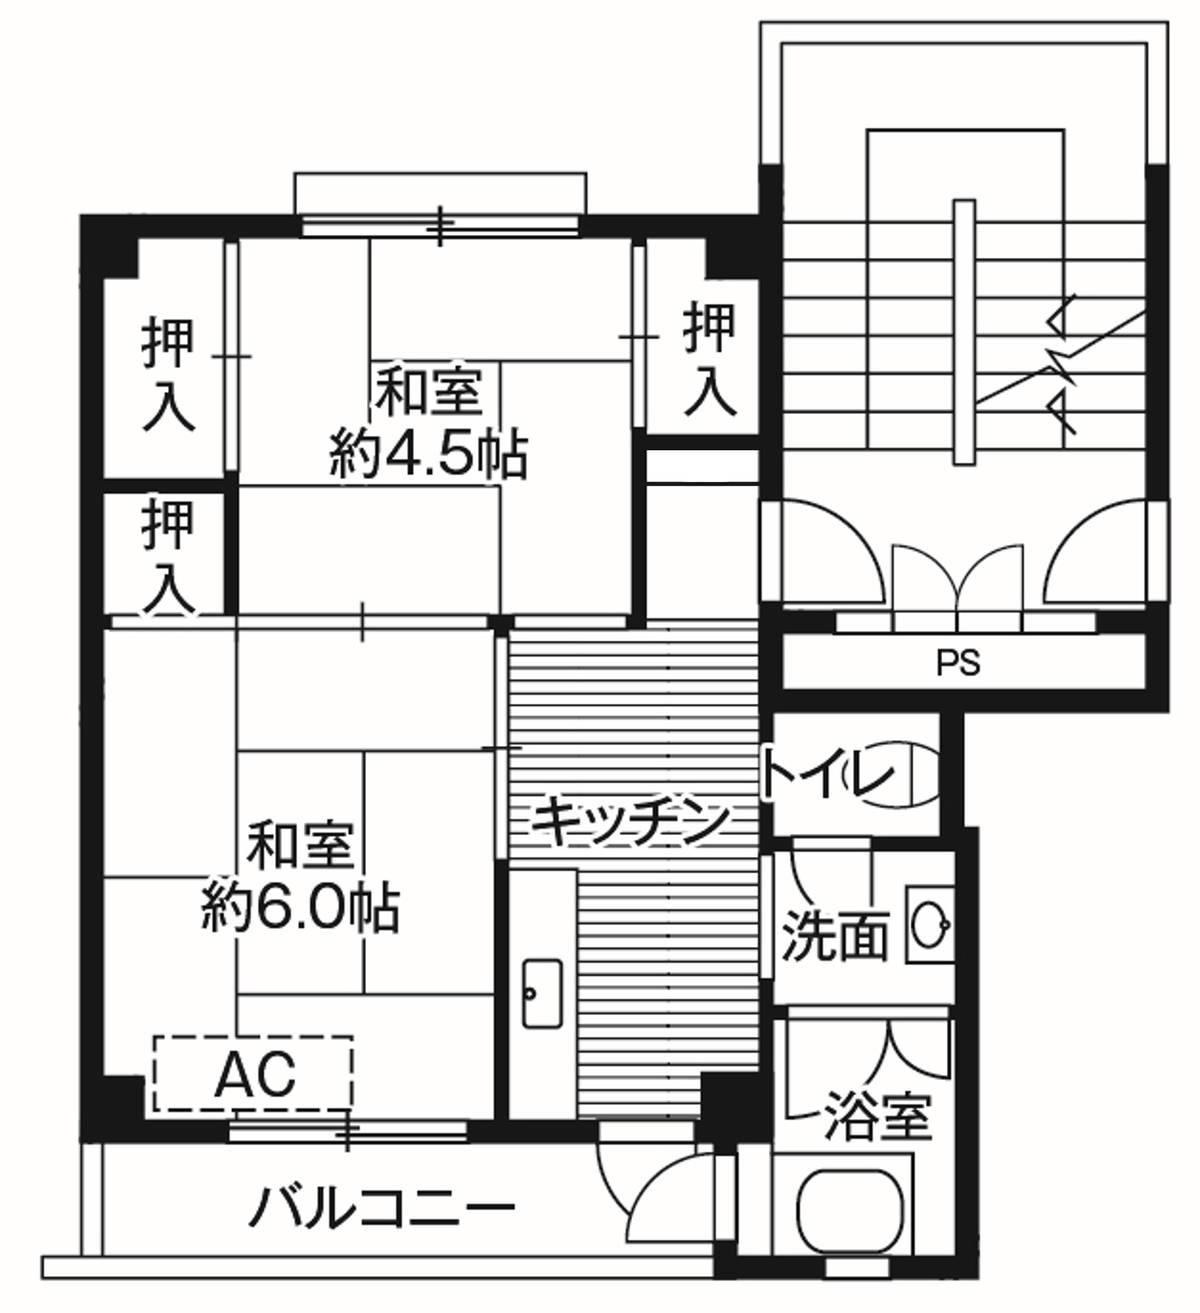 2K floorplan of Village House Inami in Hidaka-gun